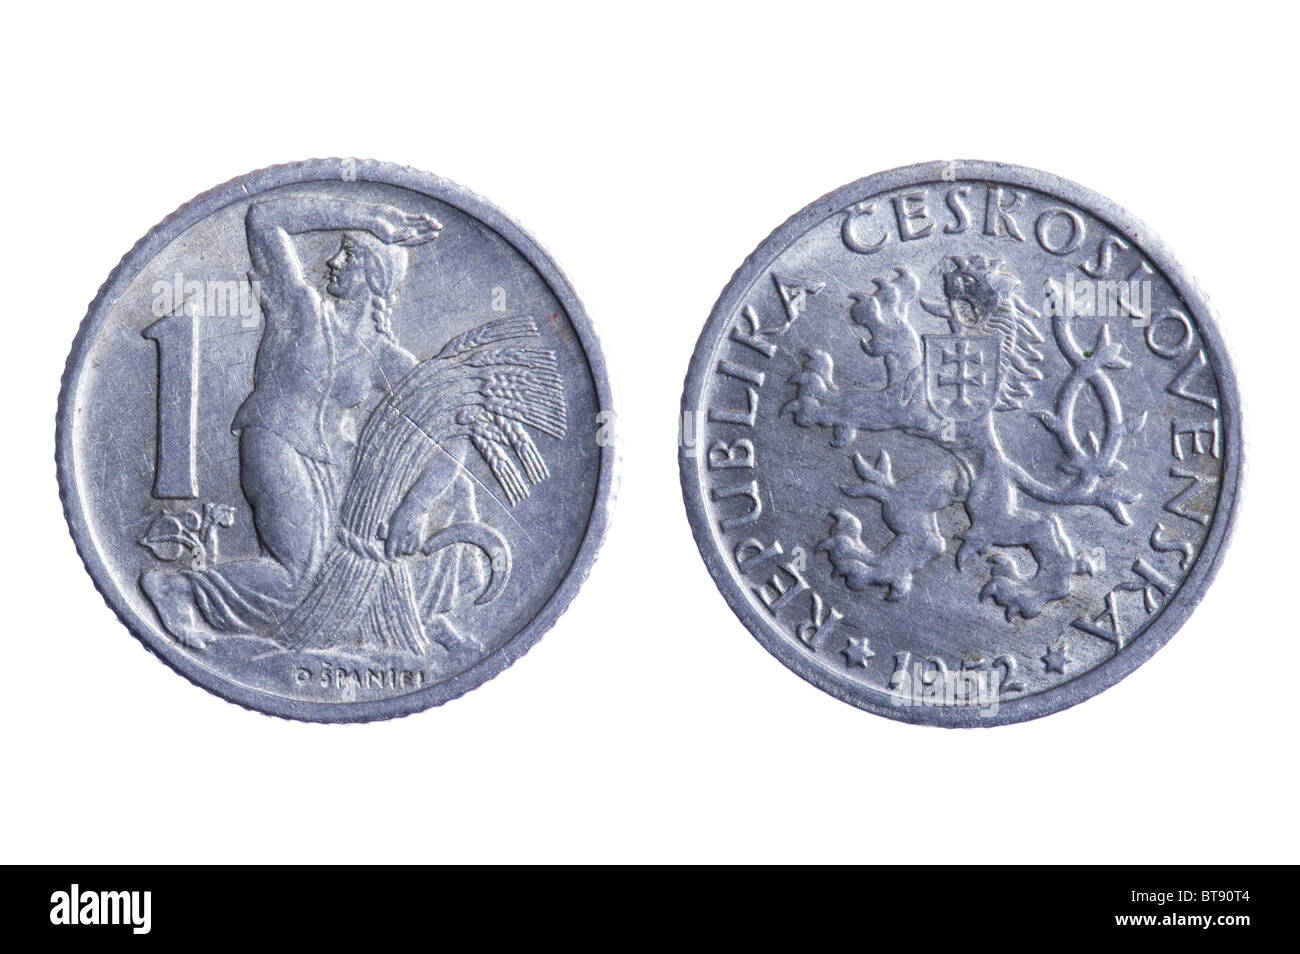 Objekt auf weiß - Tschechoslowakei Münzen hautnah Stockfoto